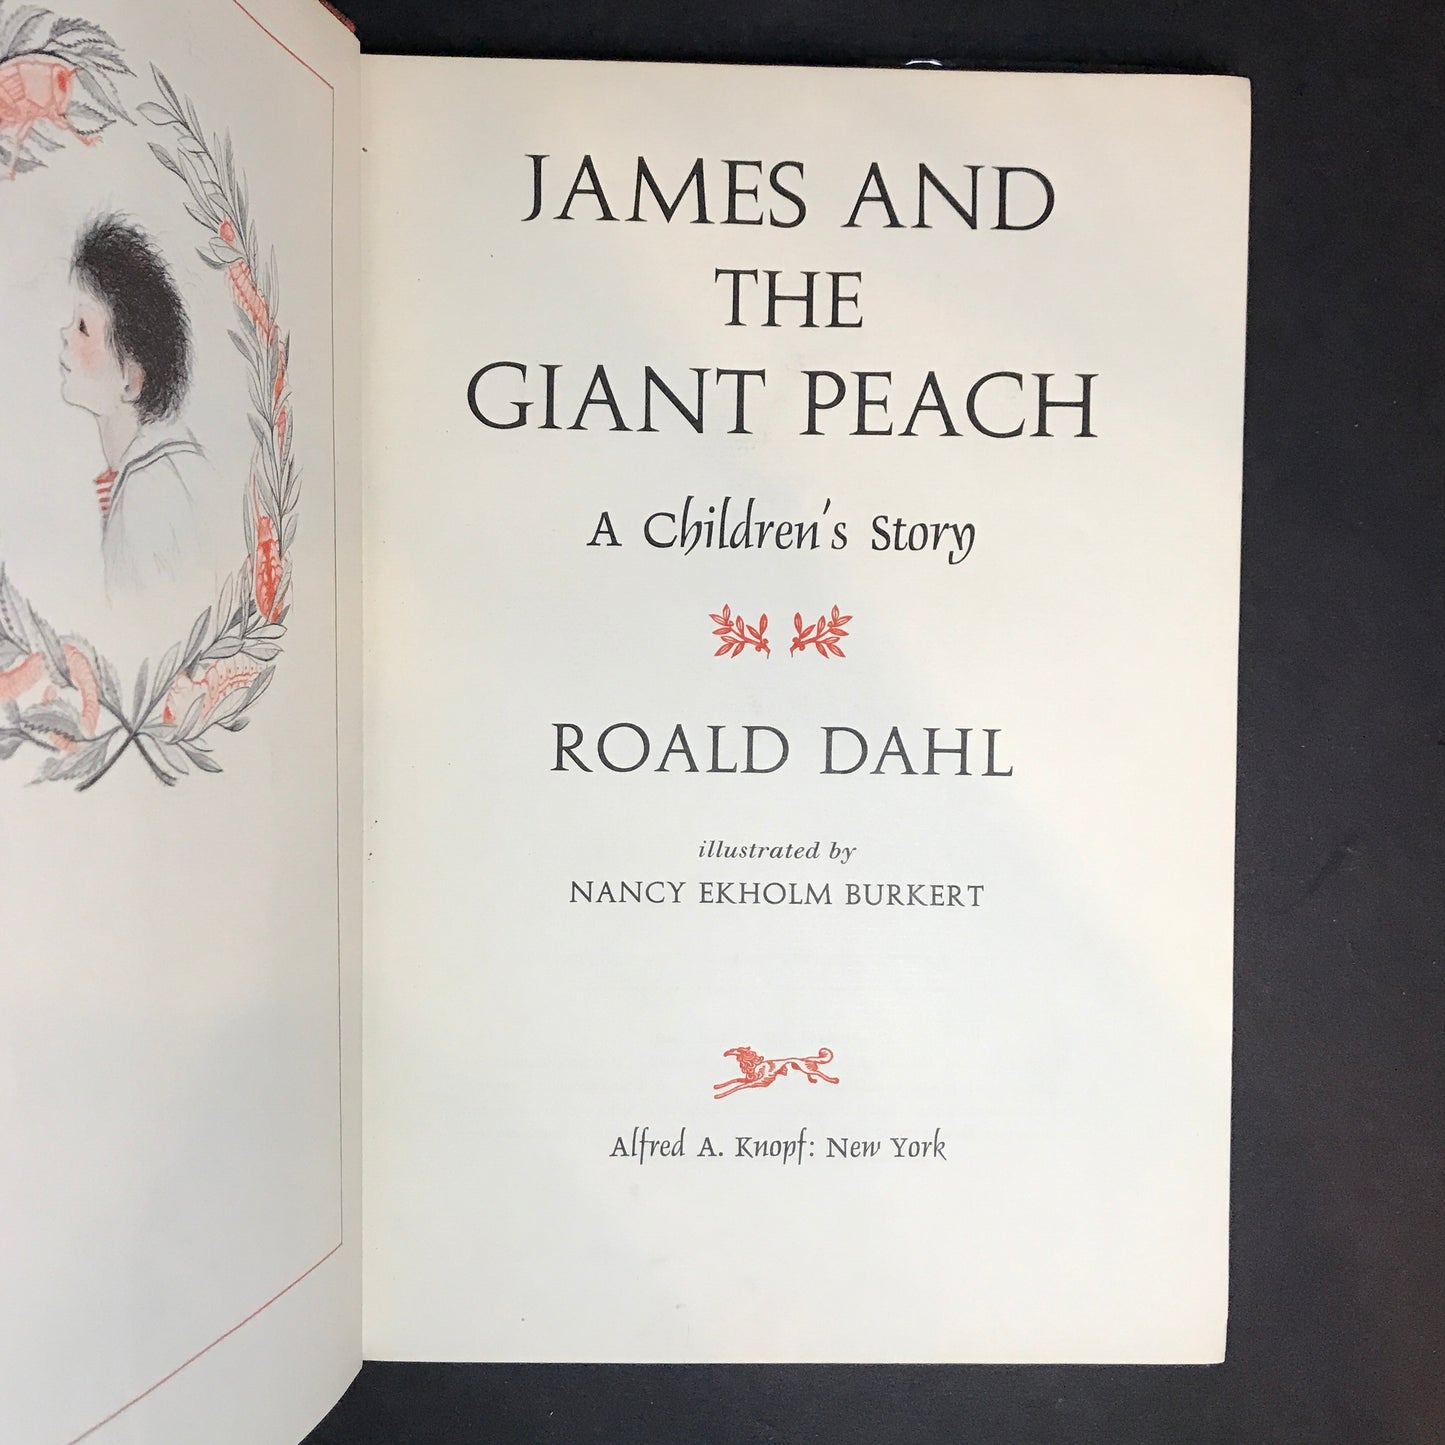 James and the Giant Peach - Roald Dahl - 1st Edition - 5 line Colophon - 1961